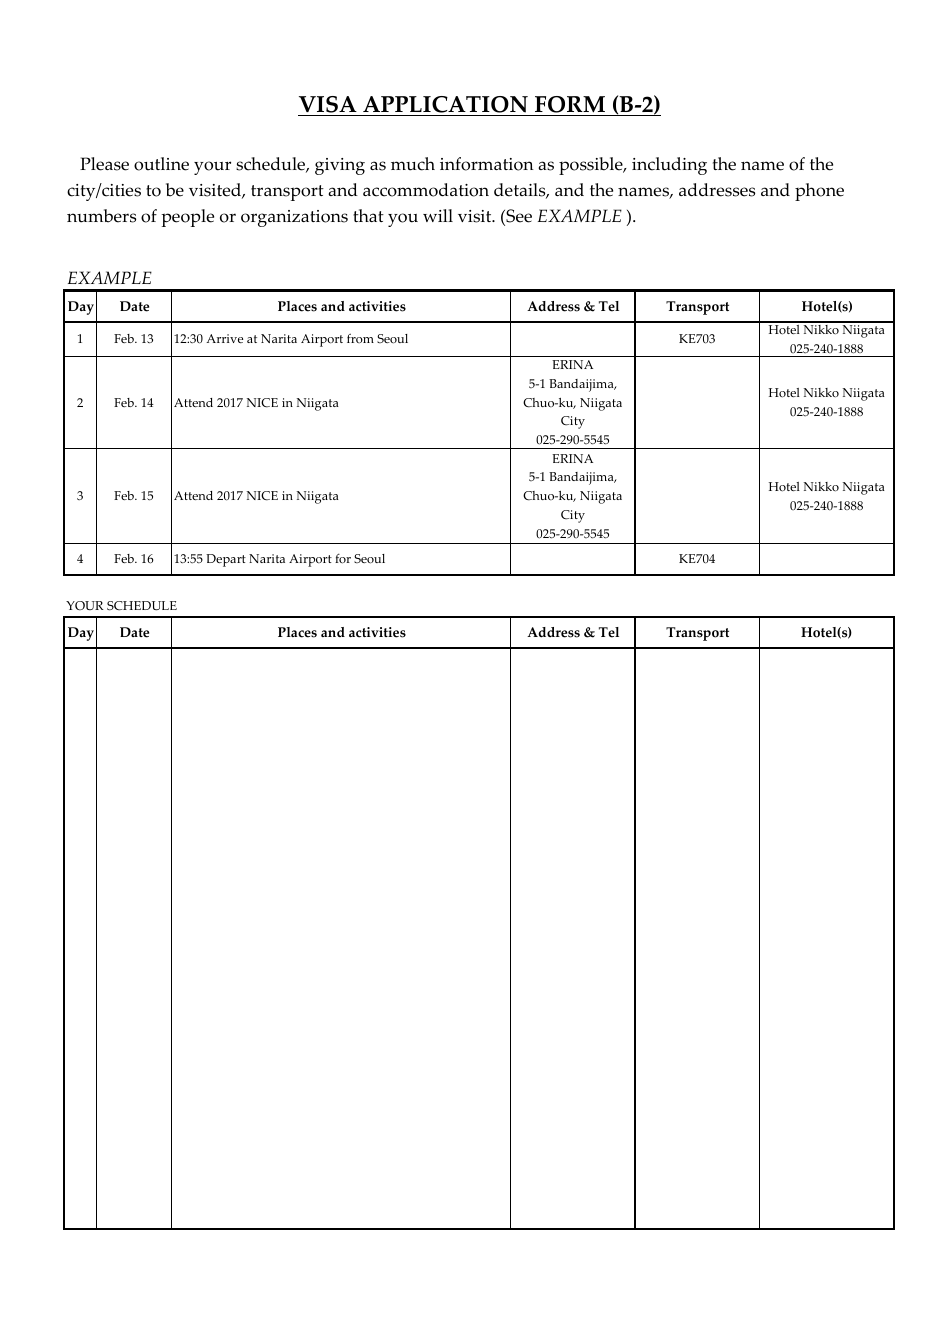 United States B-2 Visa Application Form, Page 1